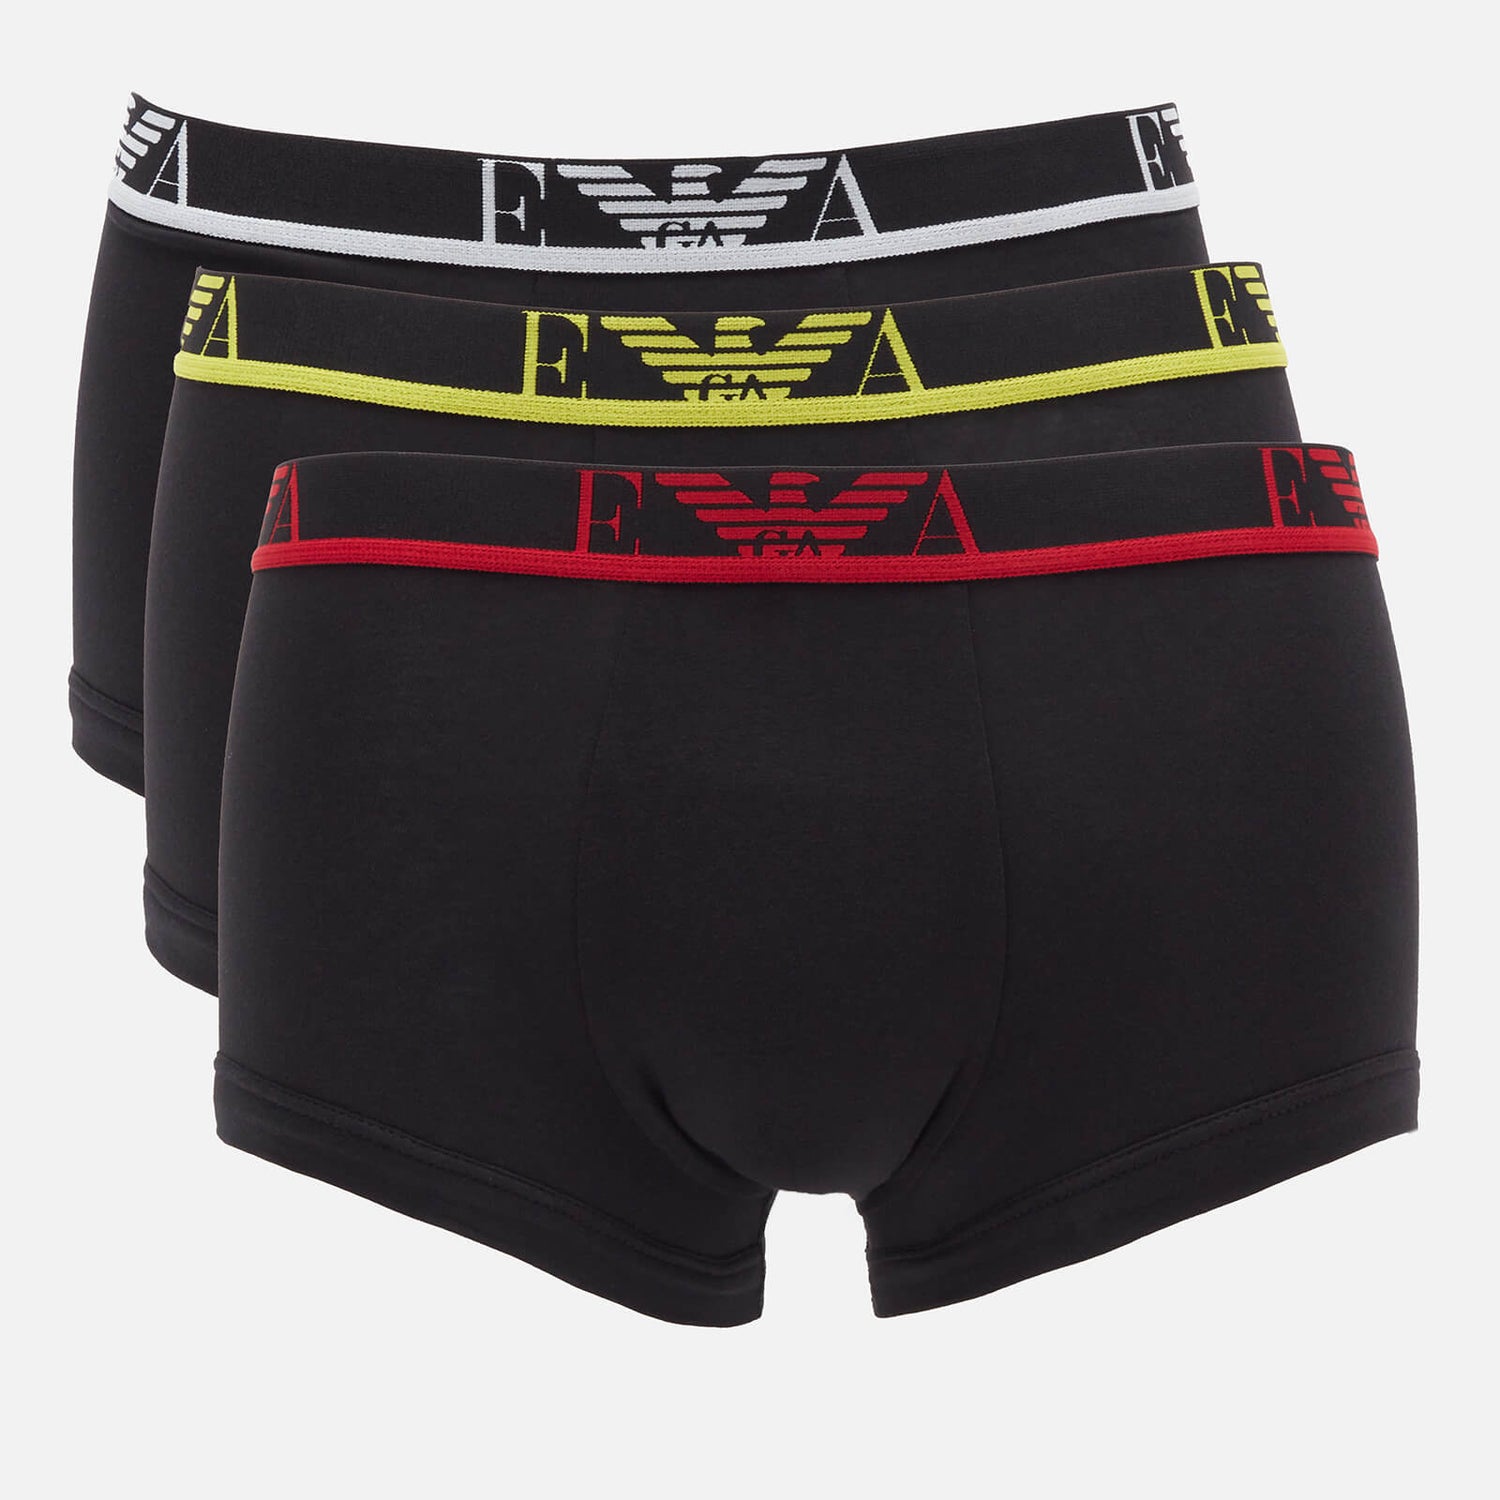 Emporio Armani Underwear Men's 3-Pack Trunks - Black